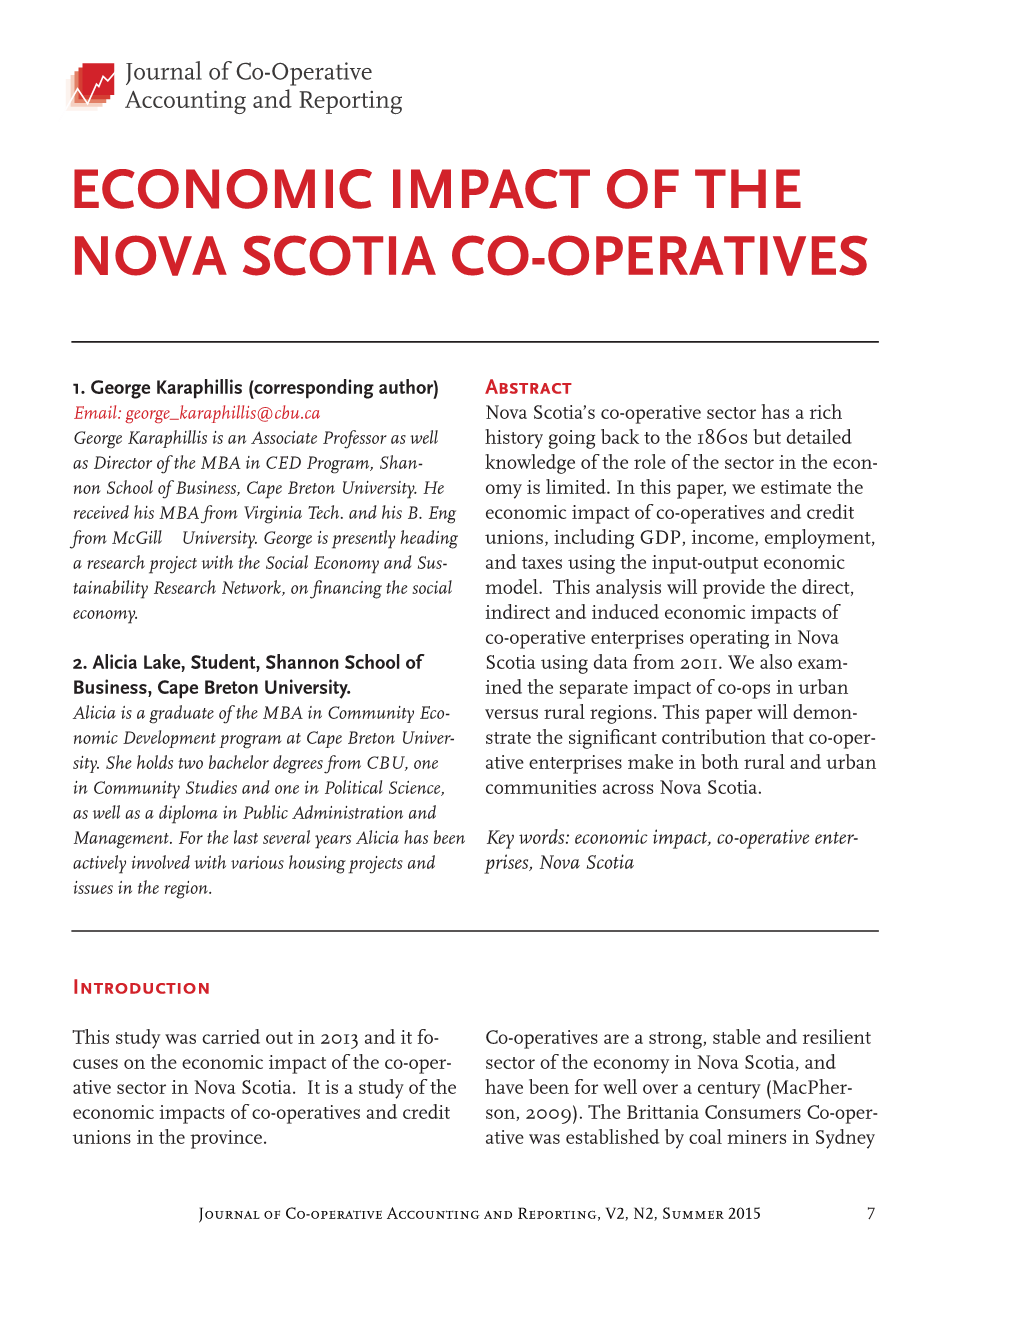 Economic Impact of the Nova Scotia Co-Operatives